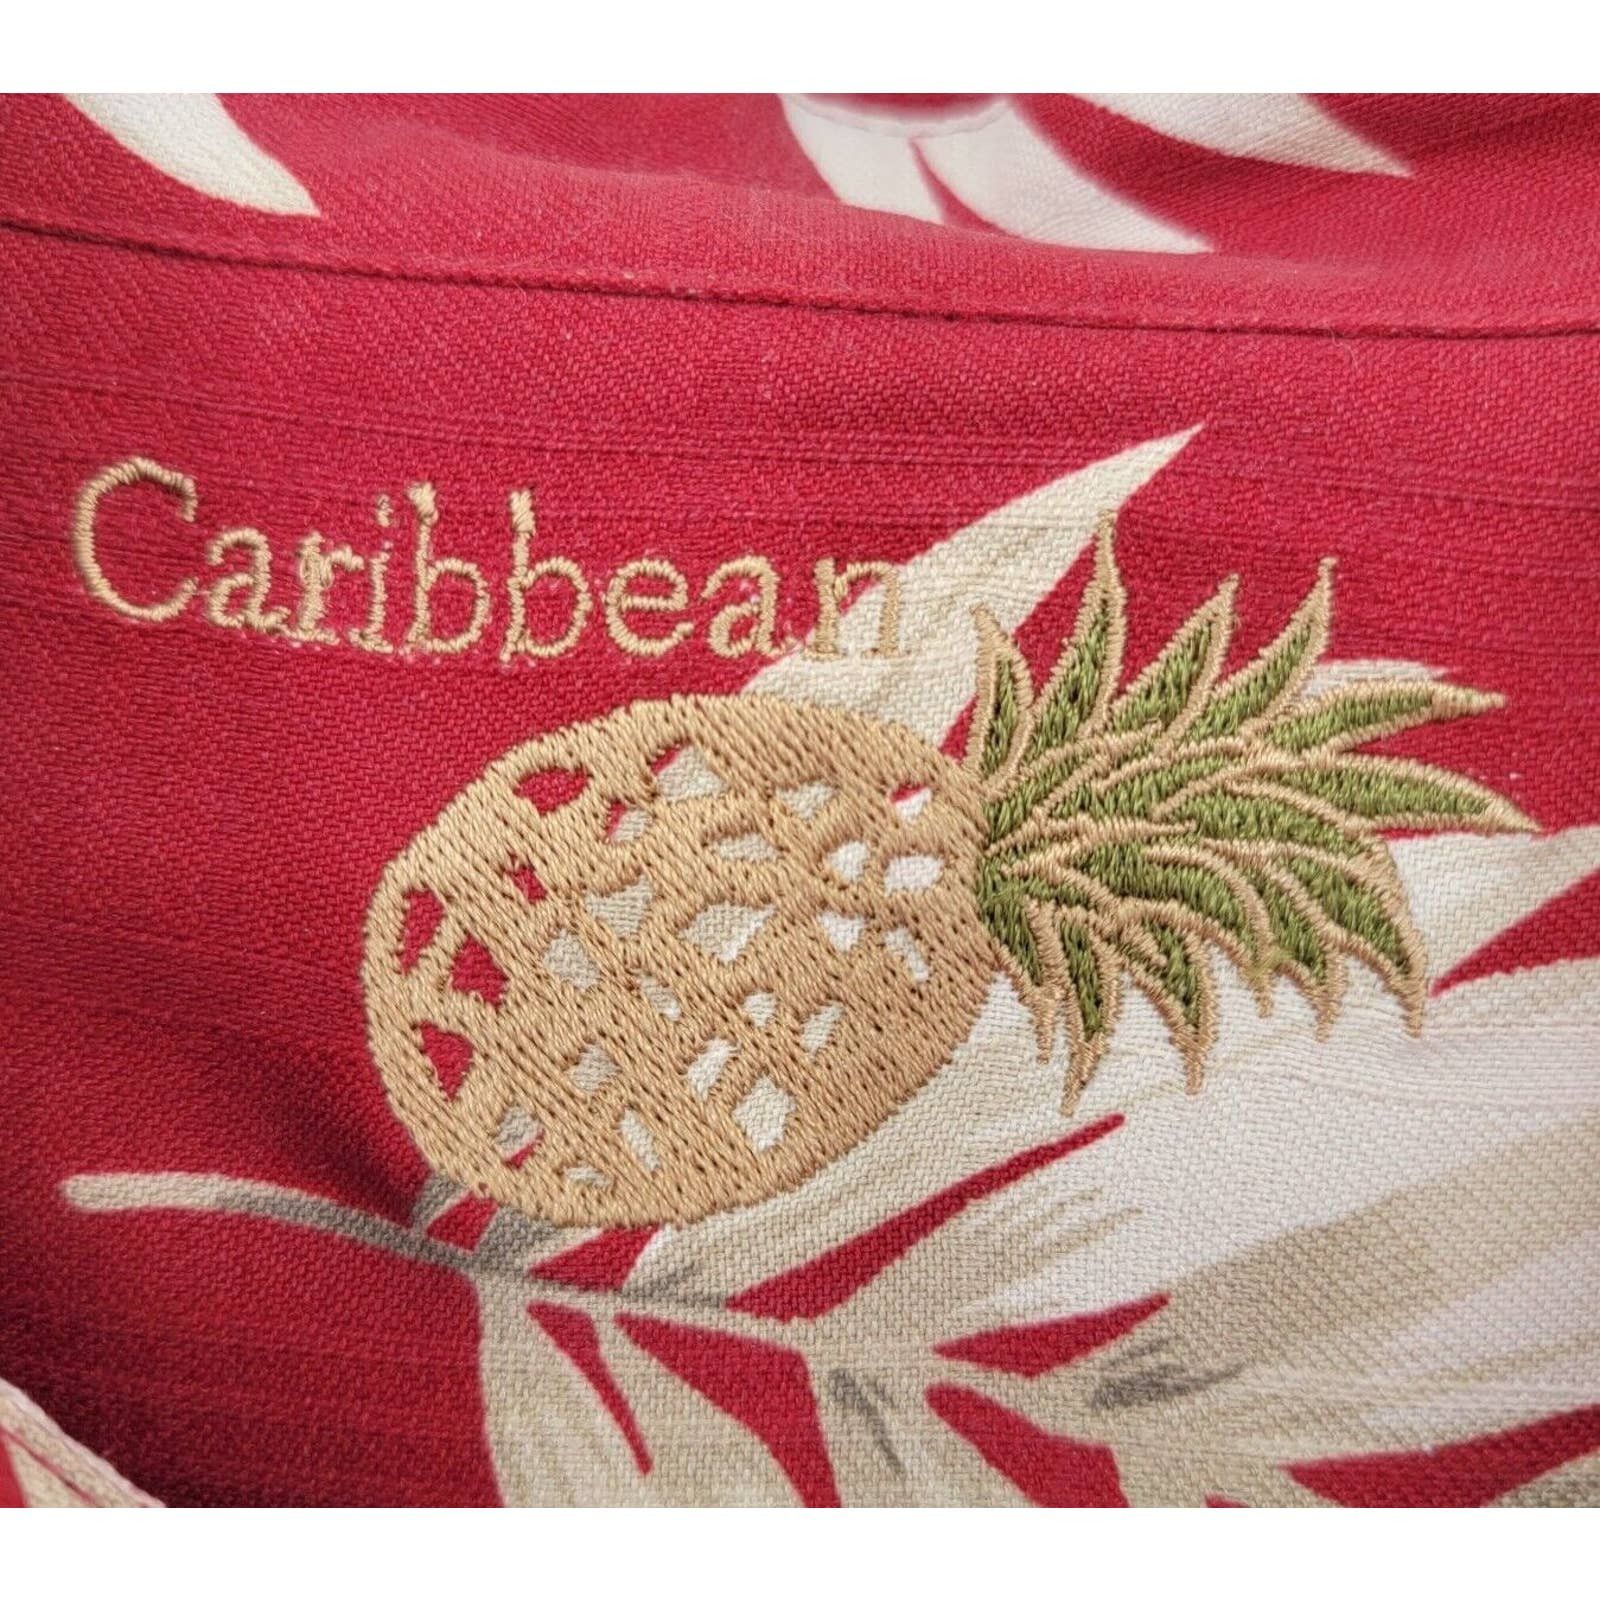 Caribbean Caribbean Pineapple Men's L Palm Silk Button Shirt Hawaiian Size US L / EU 52-54 / 3 - 5 Thumbnail